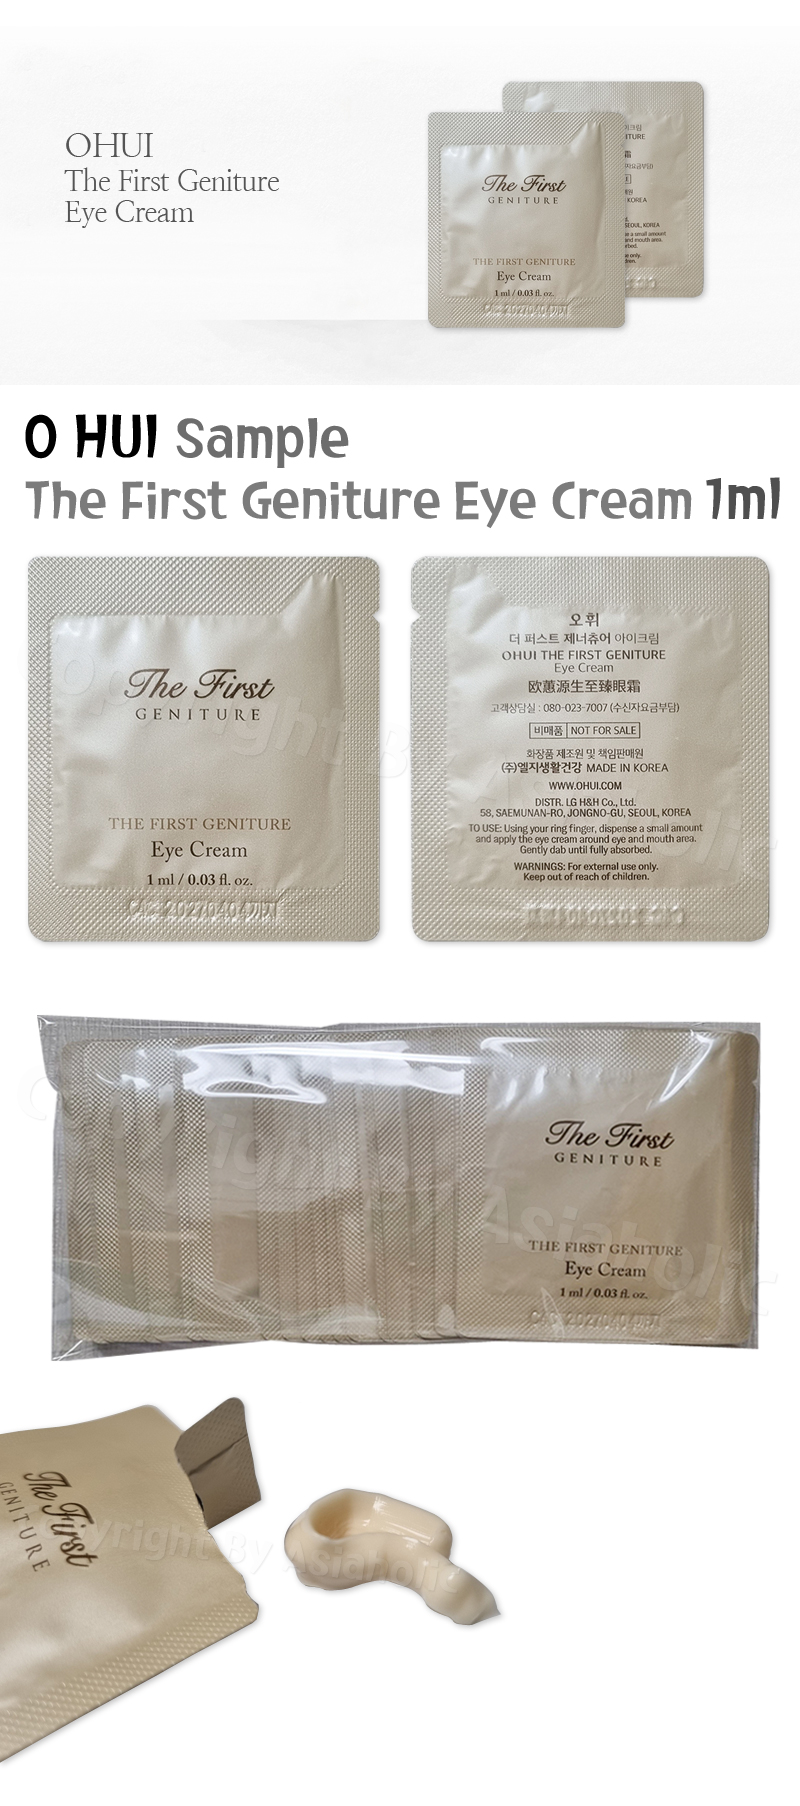 O HUI The First Geniture Eye Cream 1ml x 45pcs (45ml) Sample Newest Version OHUI